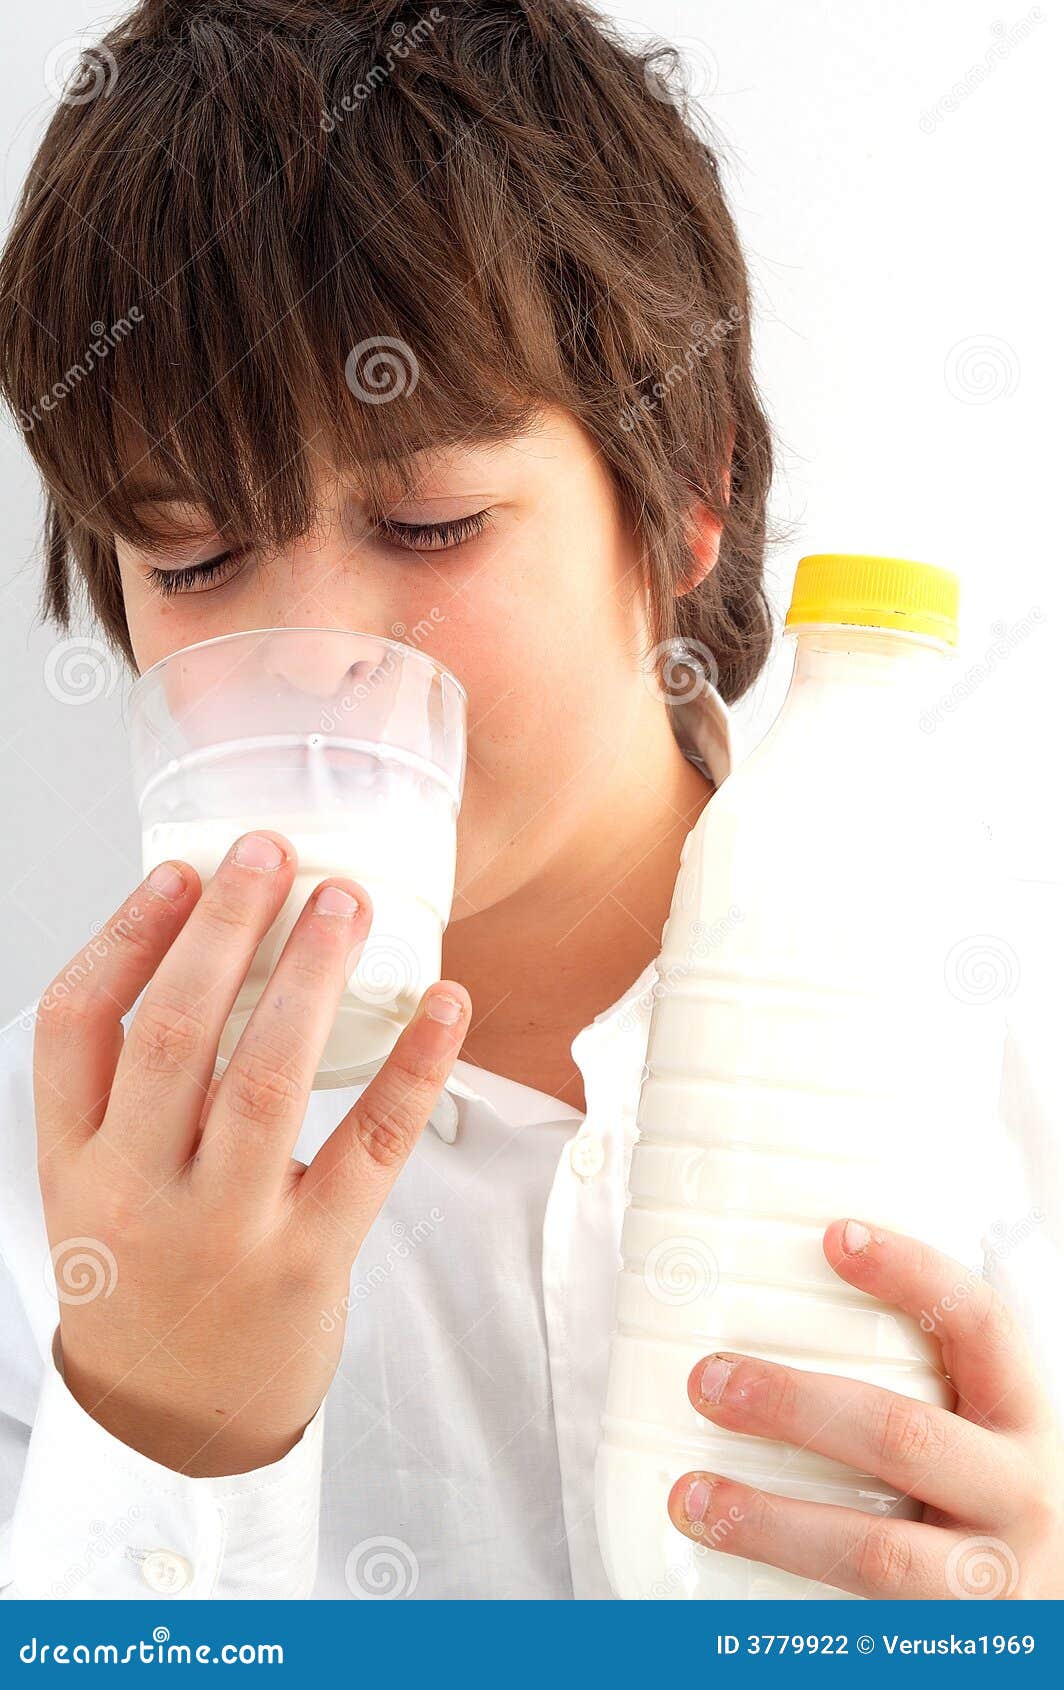 Milk Boy Stock Photography - Image: 3779922